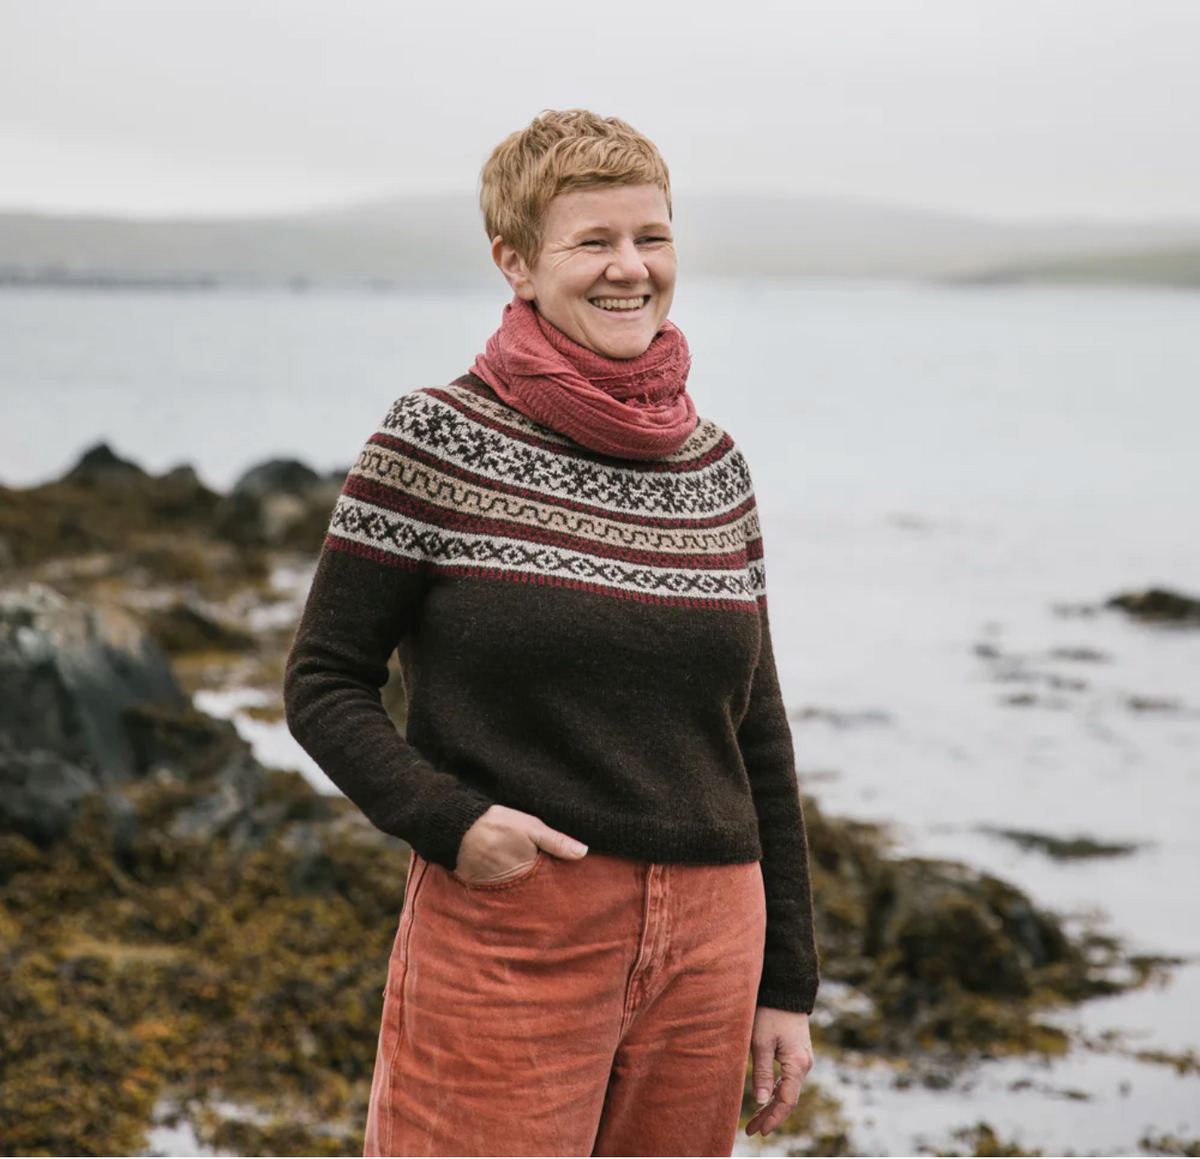 Grand Shetland Adventure Knits - Gudrun Johnston & Mary Jane Mucklestone - YourNextKnit